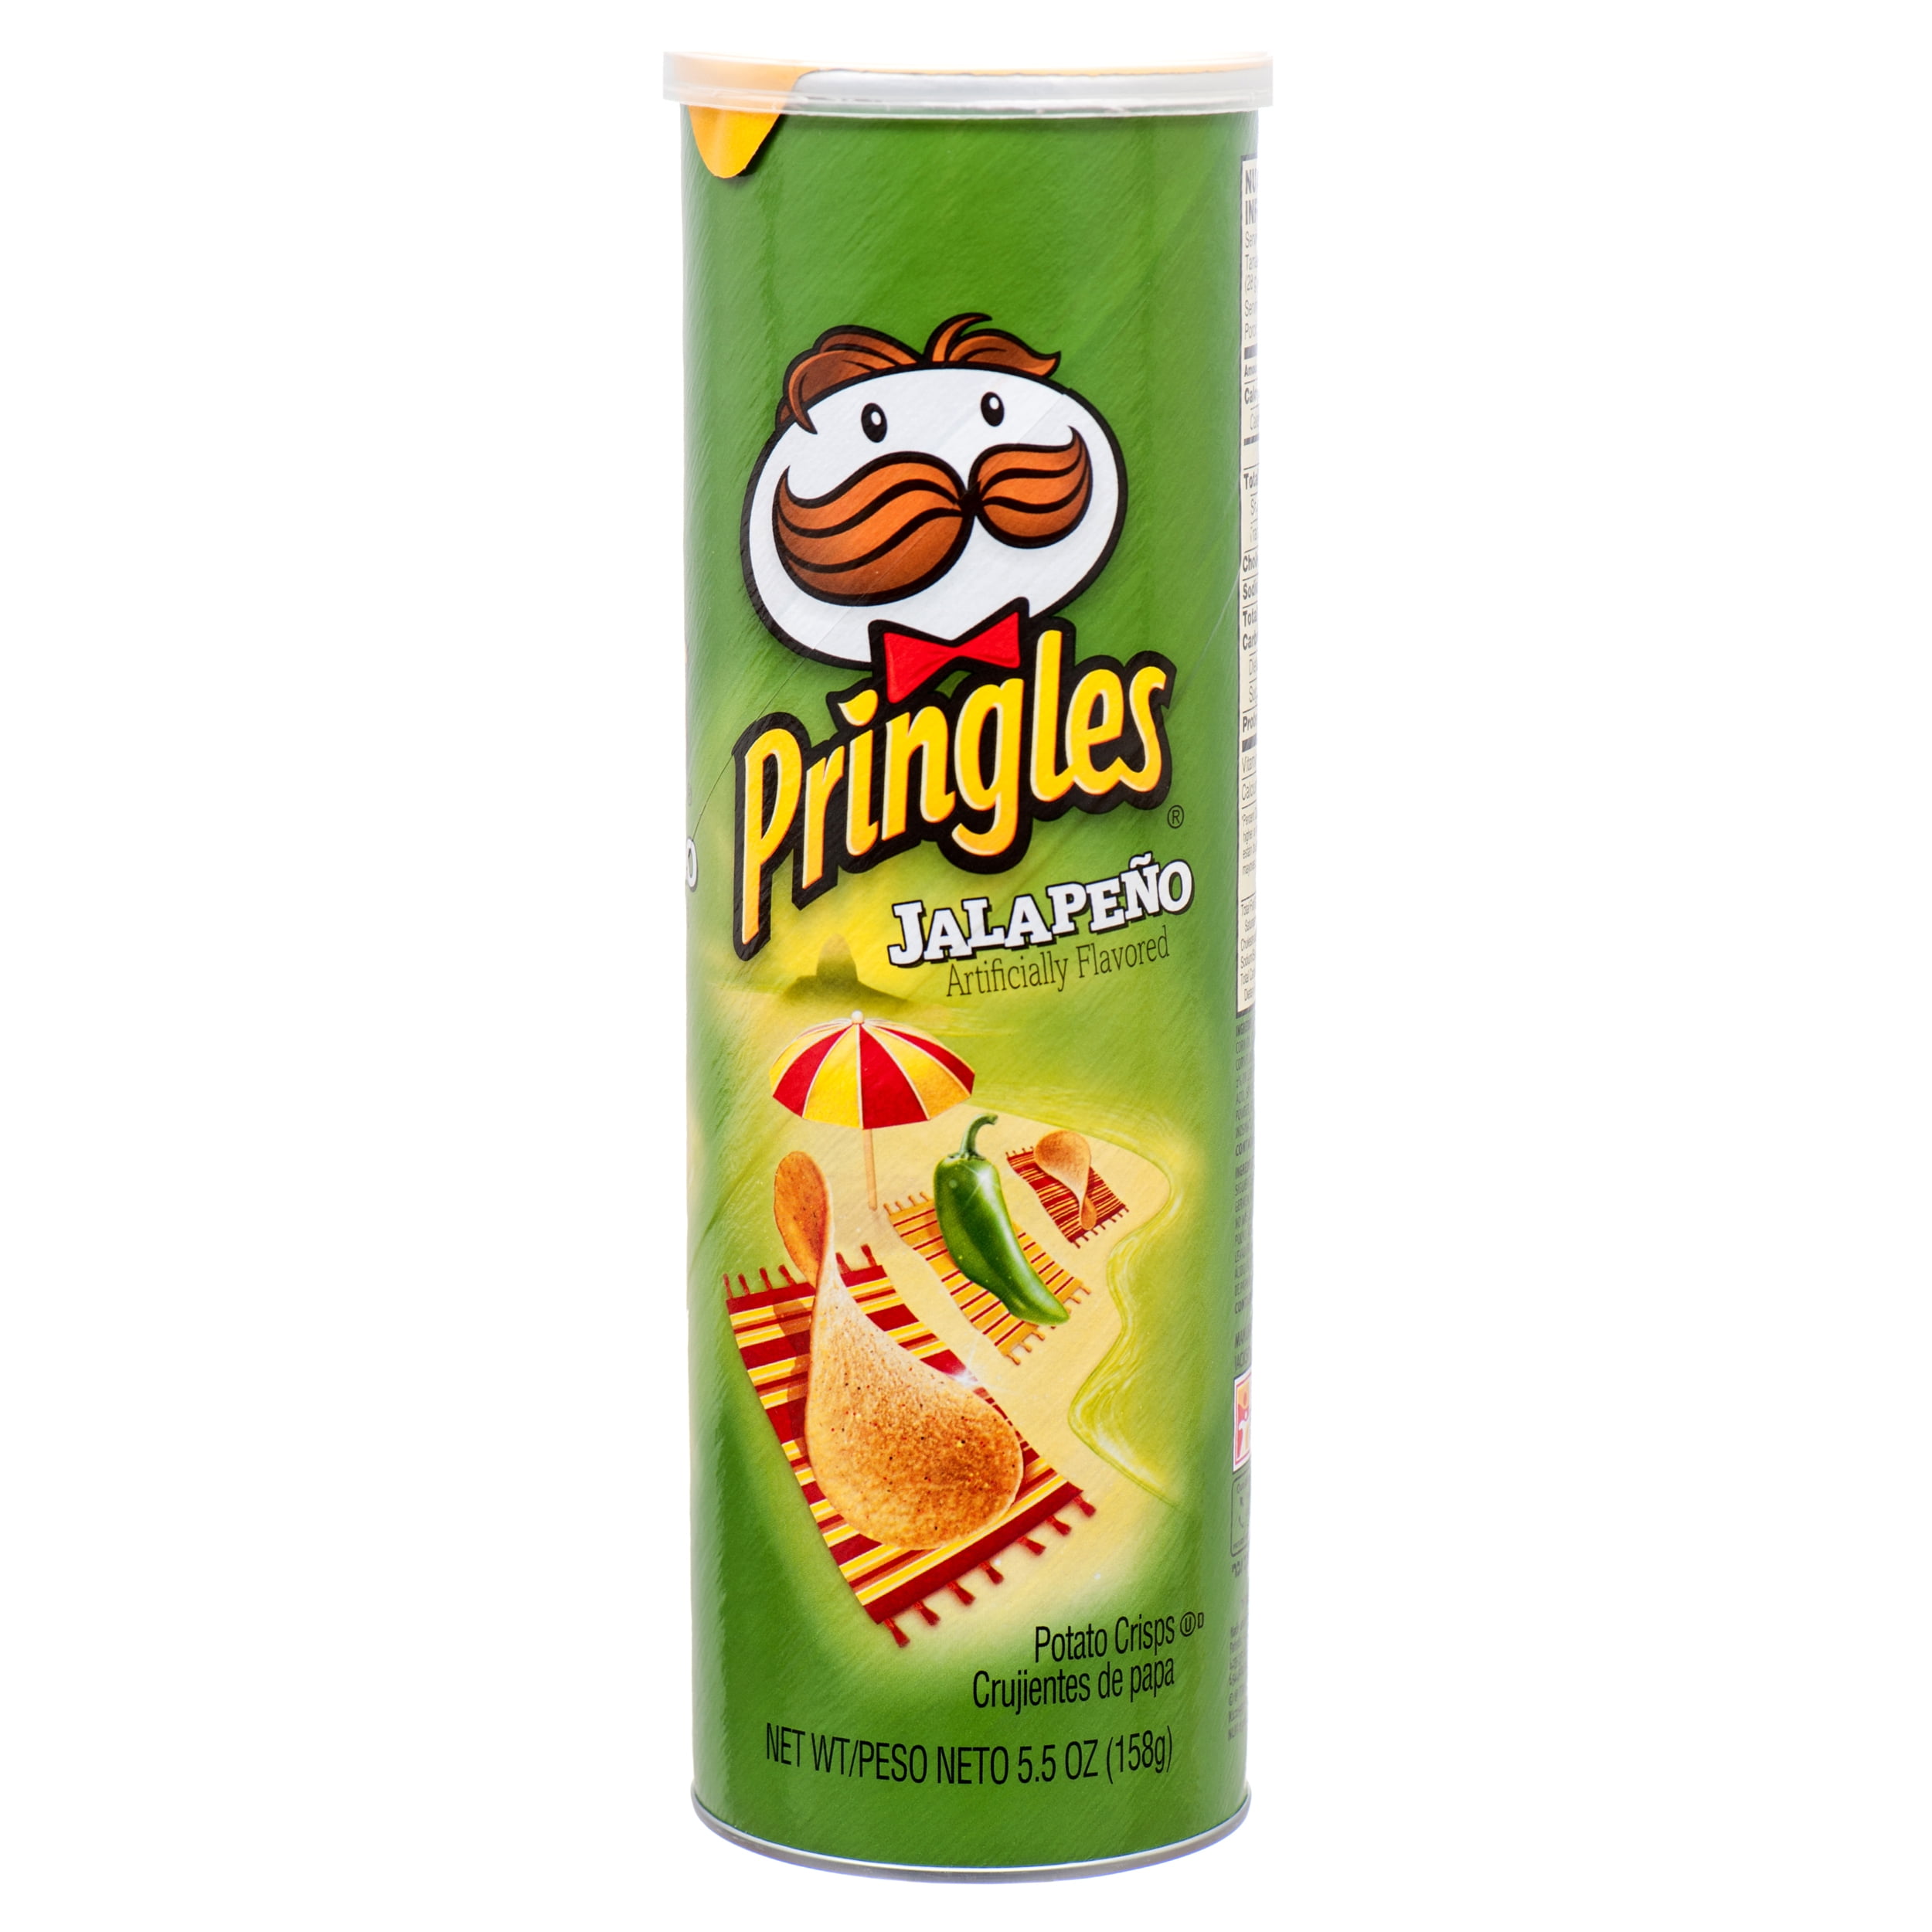 Pringles Jalapeno Flavor Potato Crisps 5.5 oz. Can (1 Pack) - Walmart.com